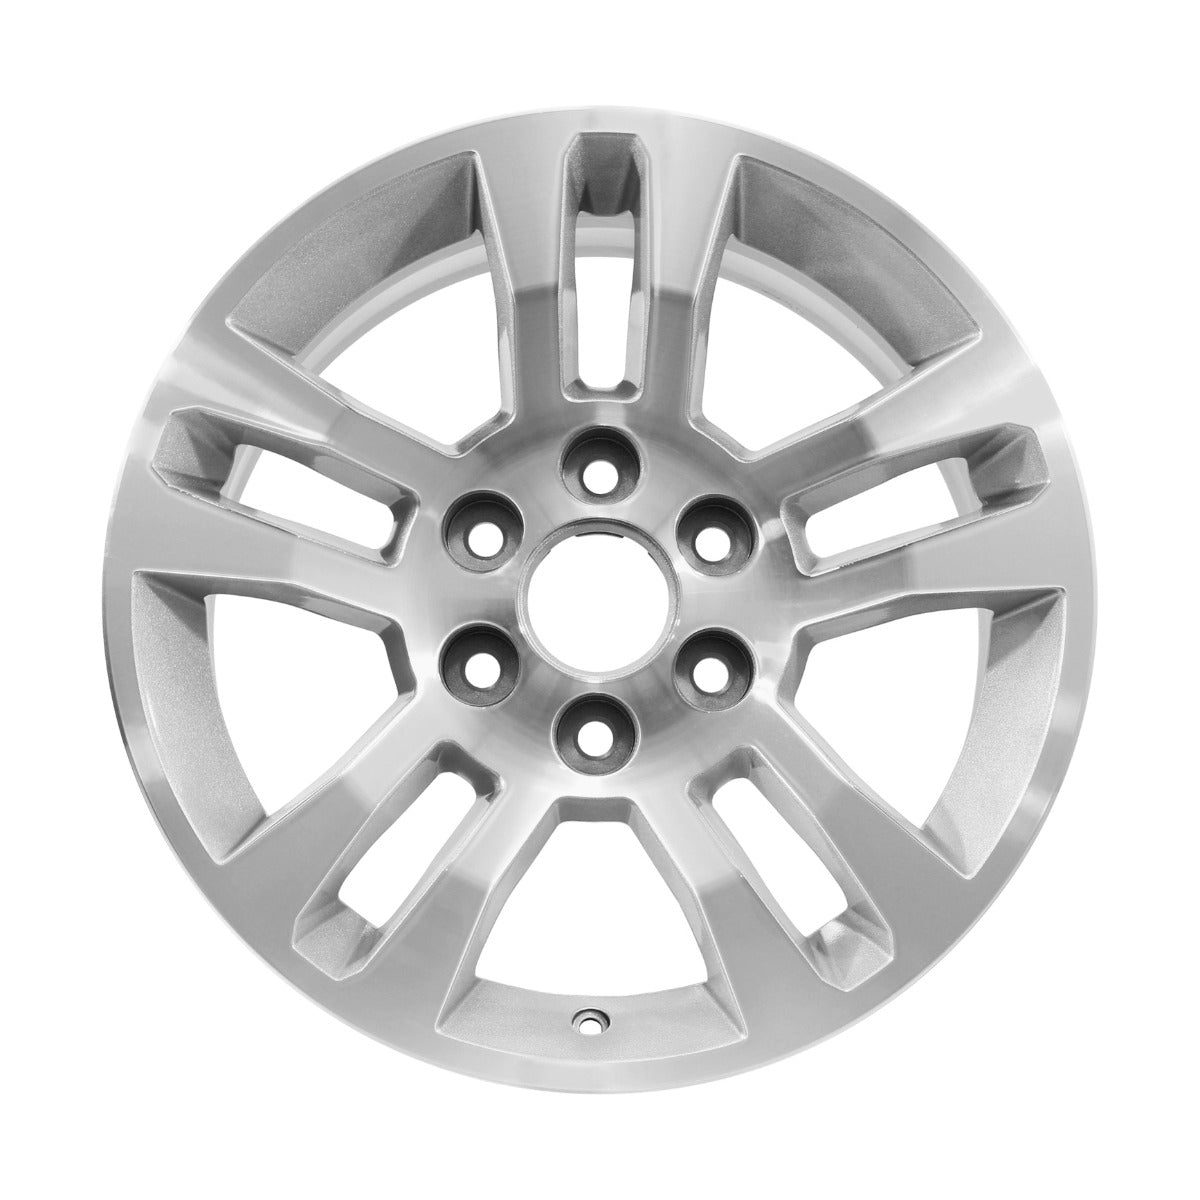 2014 Chevrolet Silverado 1500 18" OEM Wheel Rim W5646MS